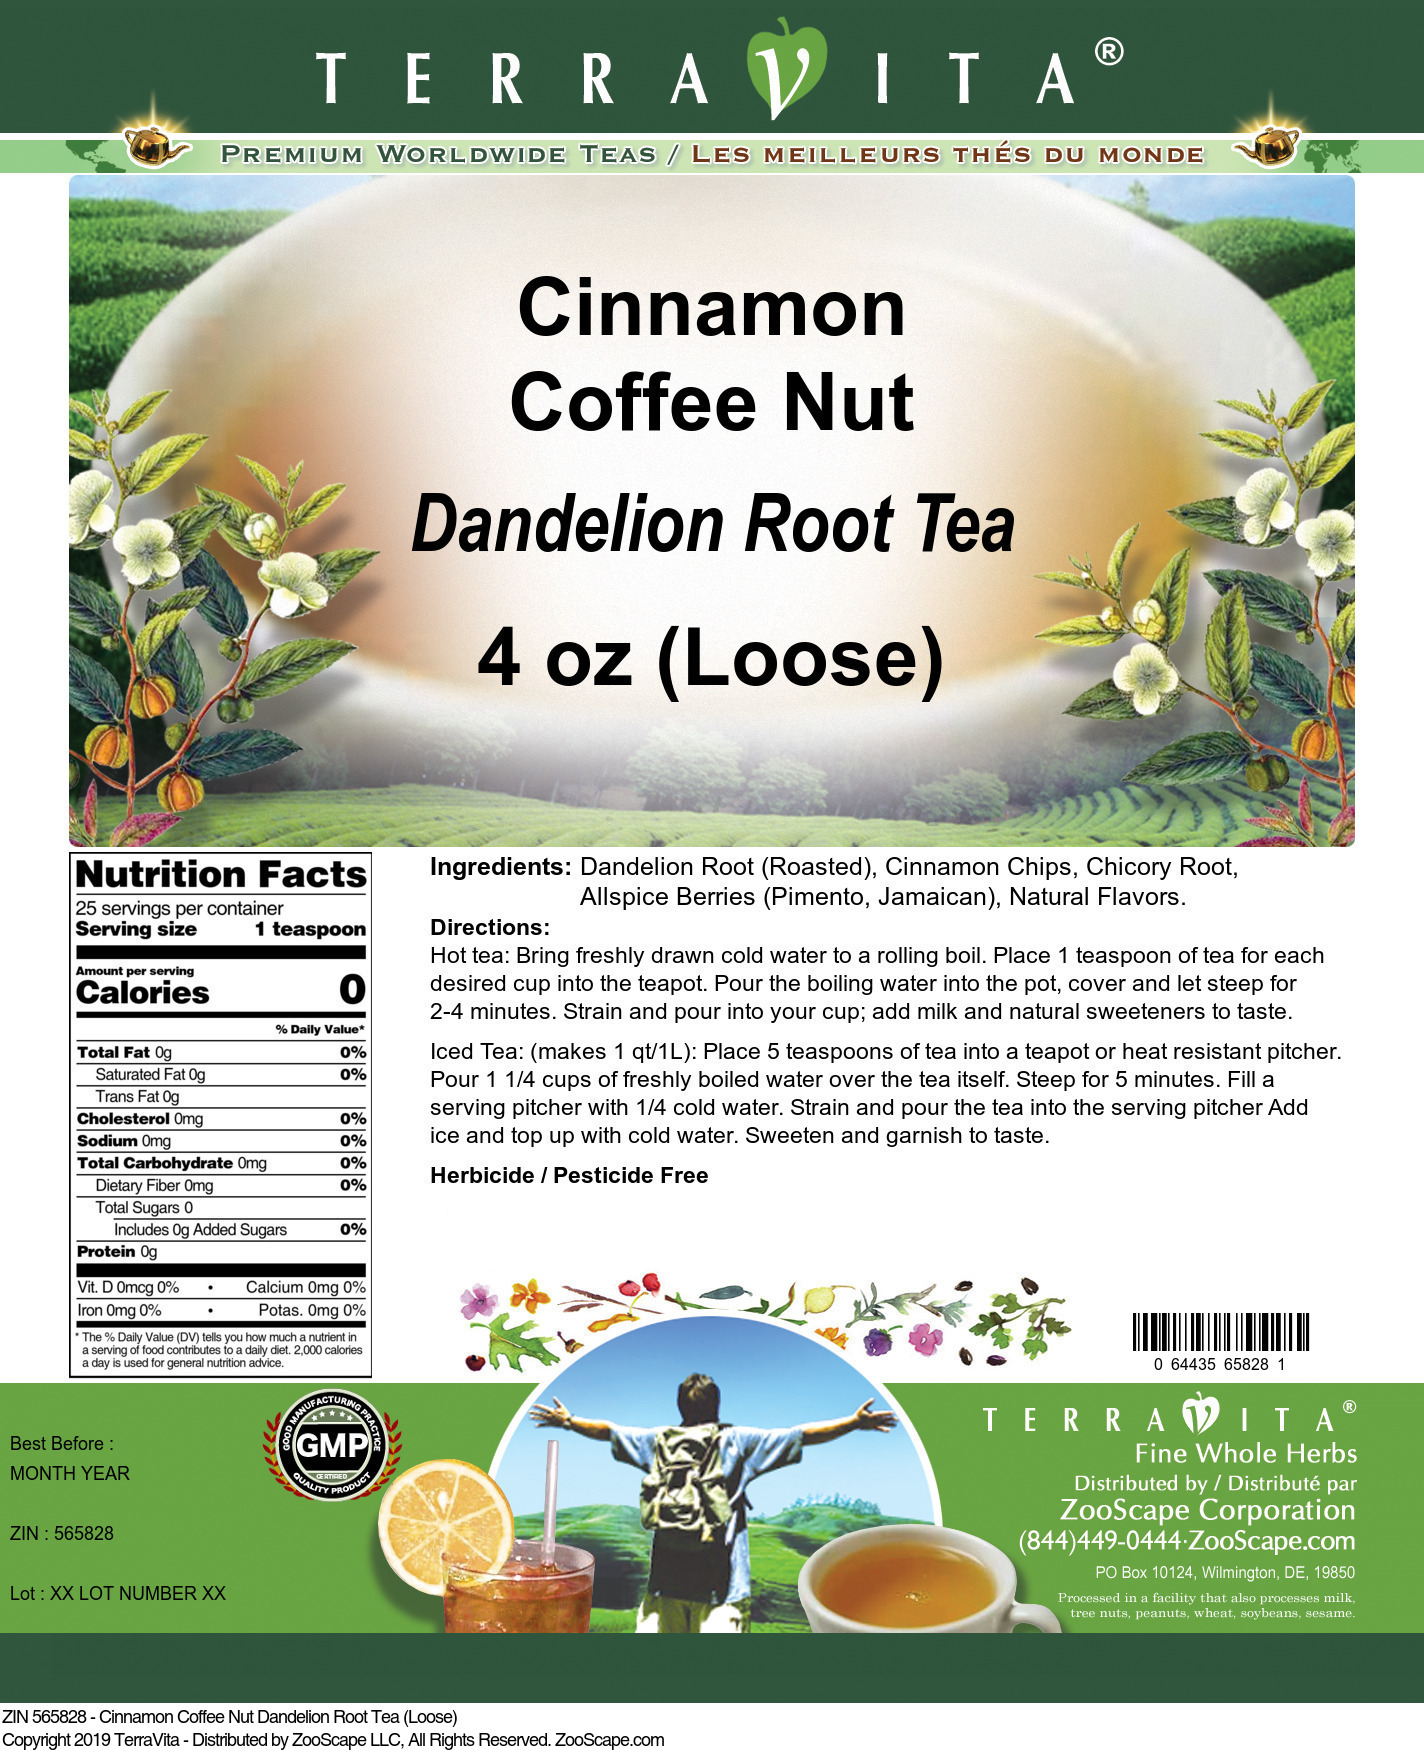 Cinnamon Coffee Nut Dandelion Root Tea (Loose) - Label